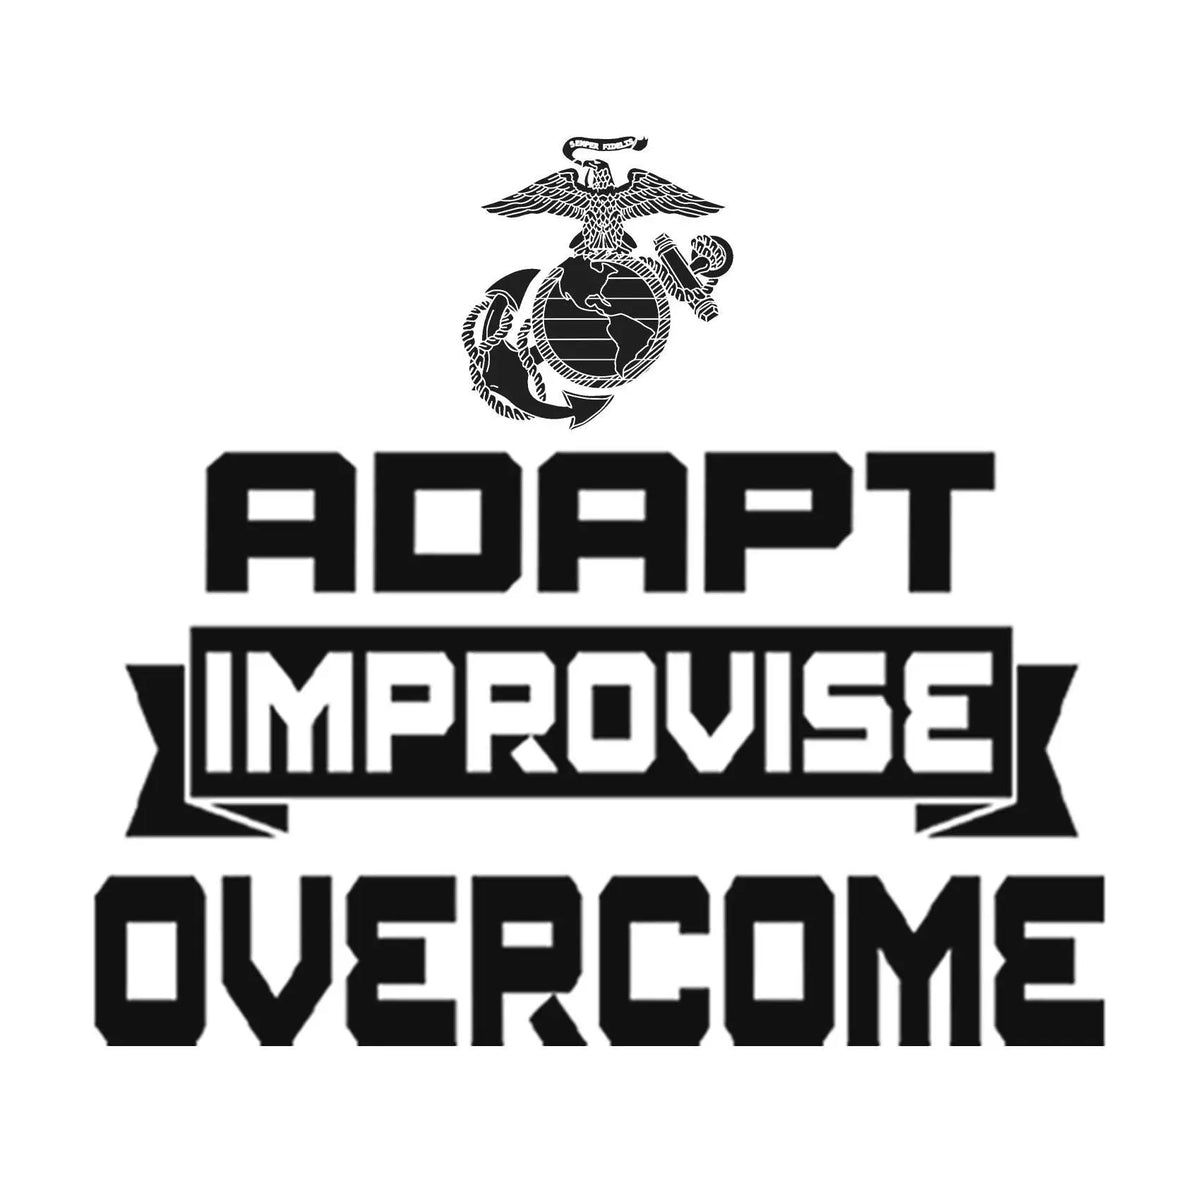 Adapt, Improvise, Overcome 2-Sided Sweatshirt - Marine Corps Direct